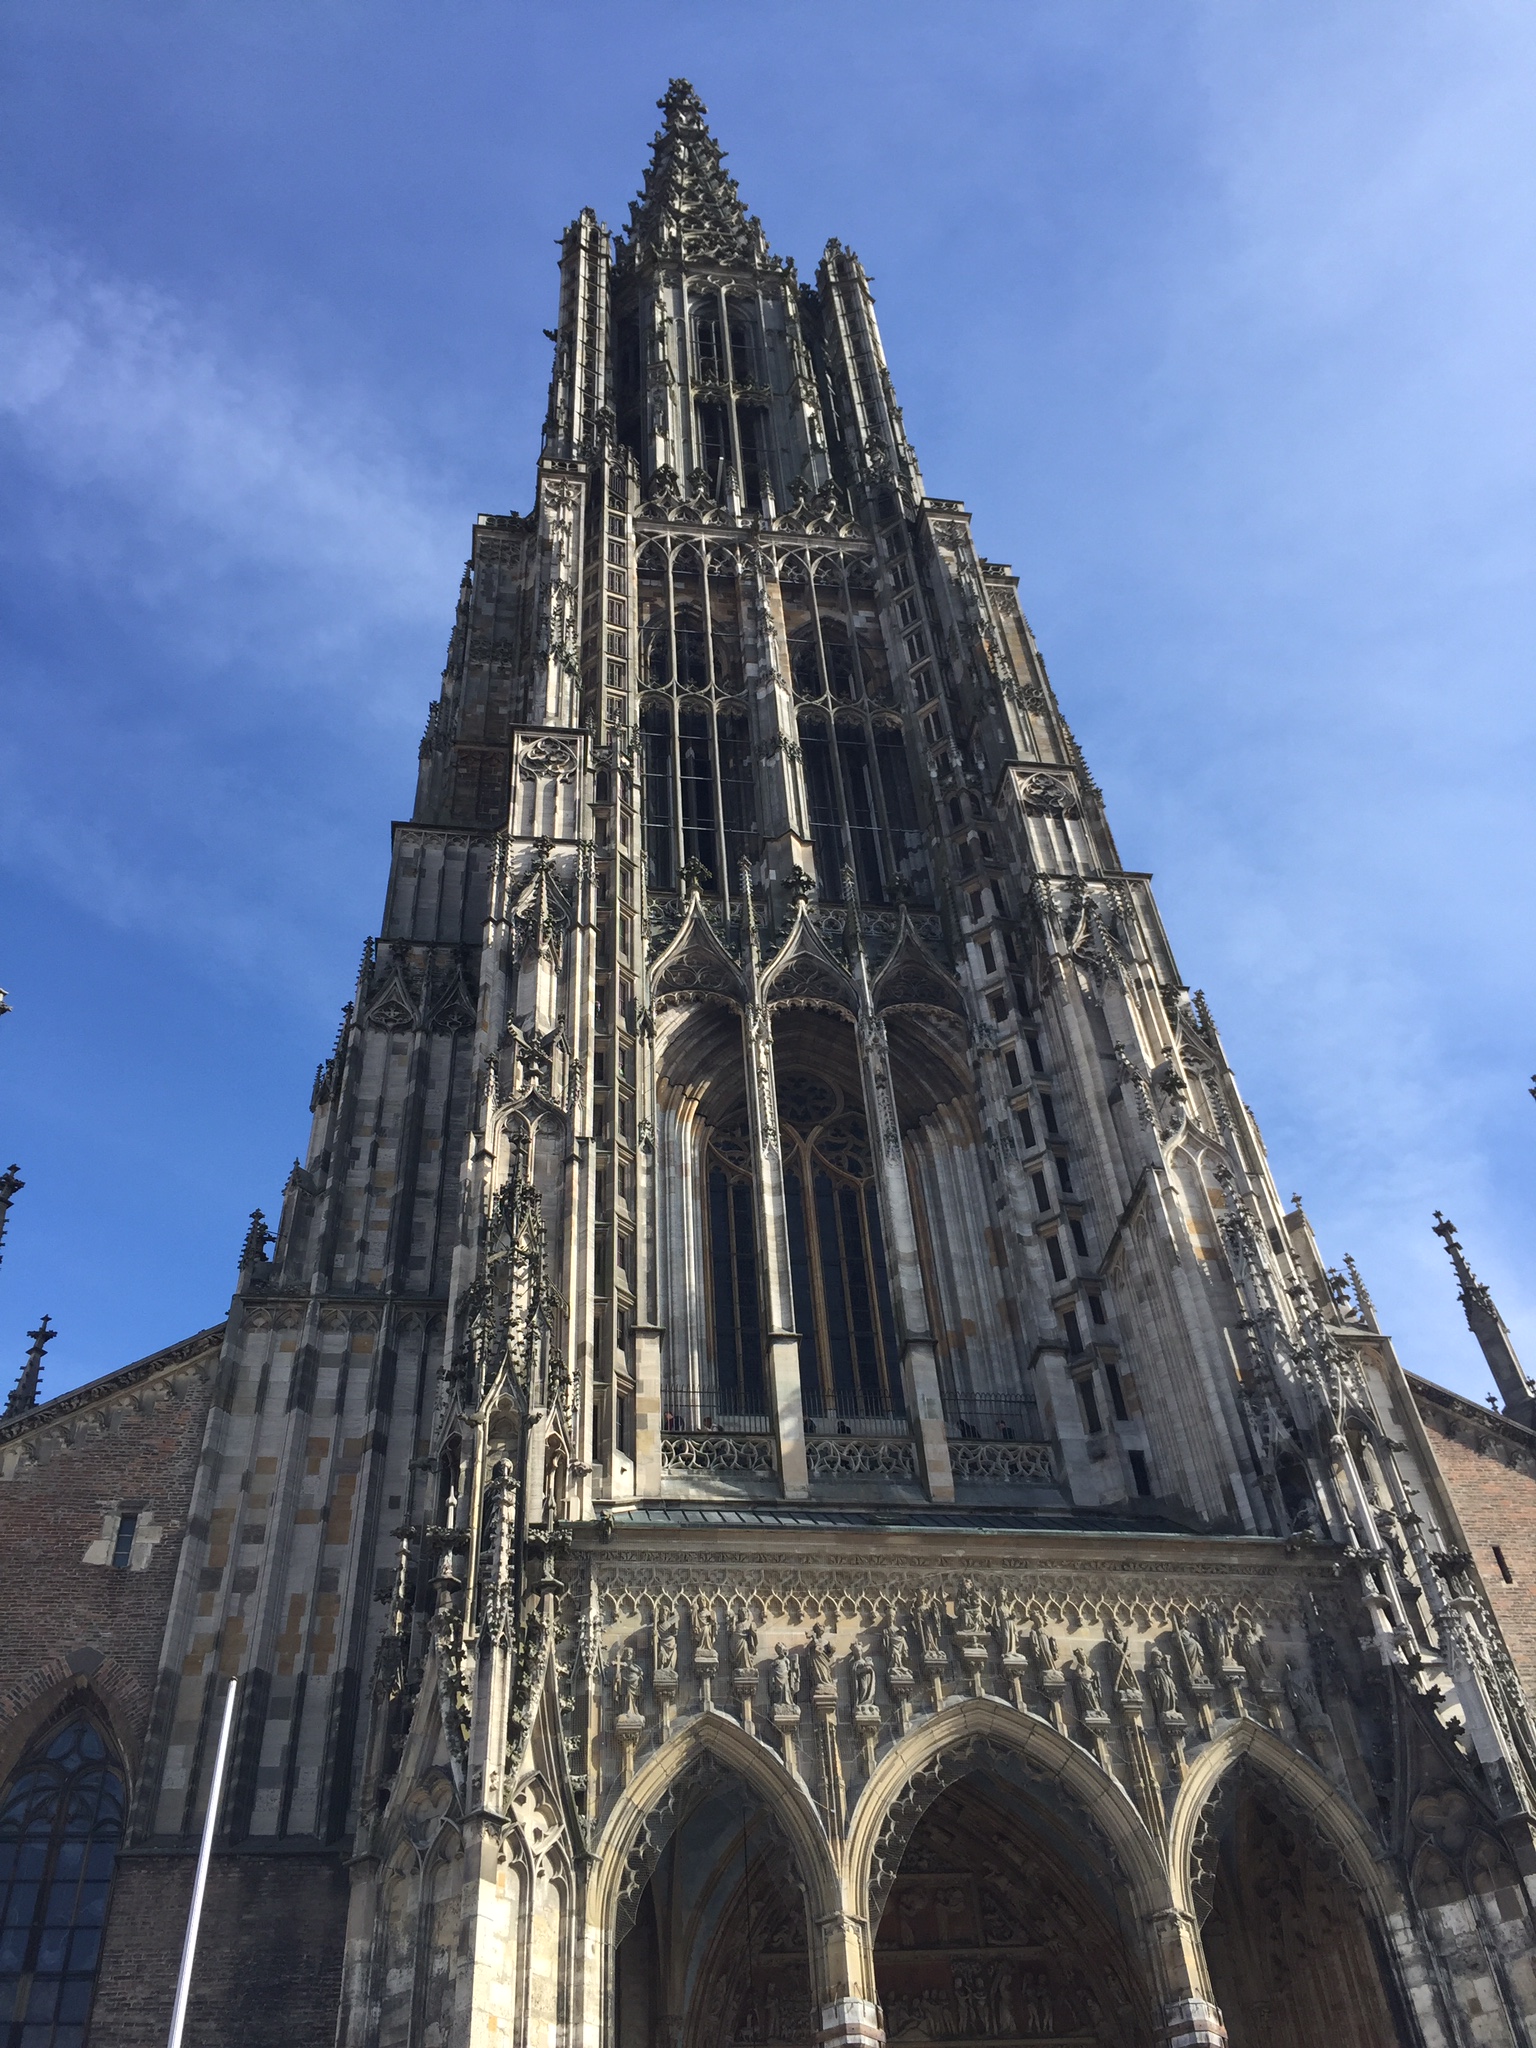 Highest Church tower in the world - Ulm